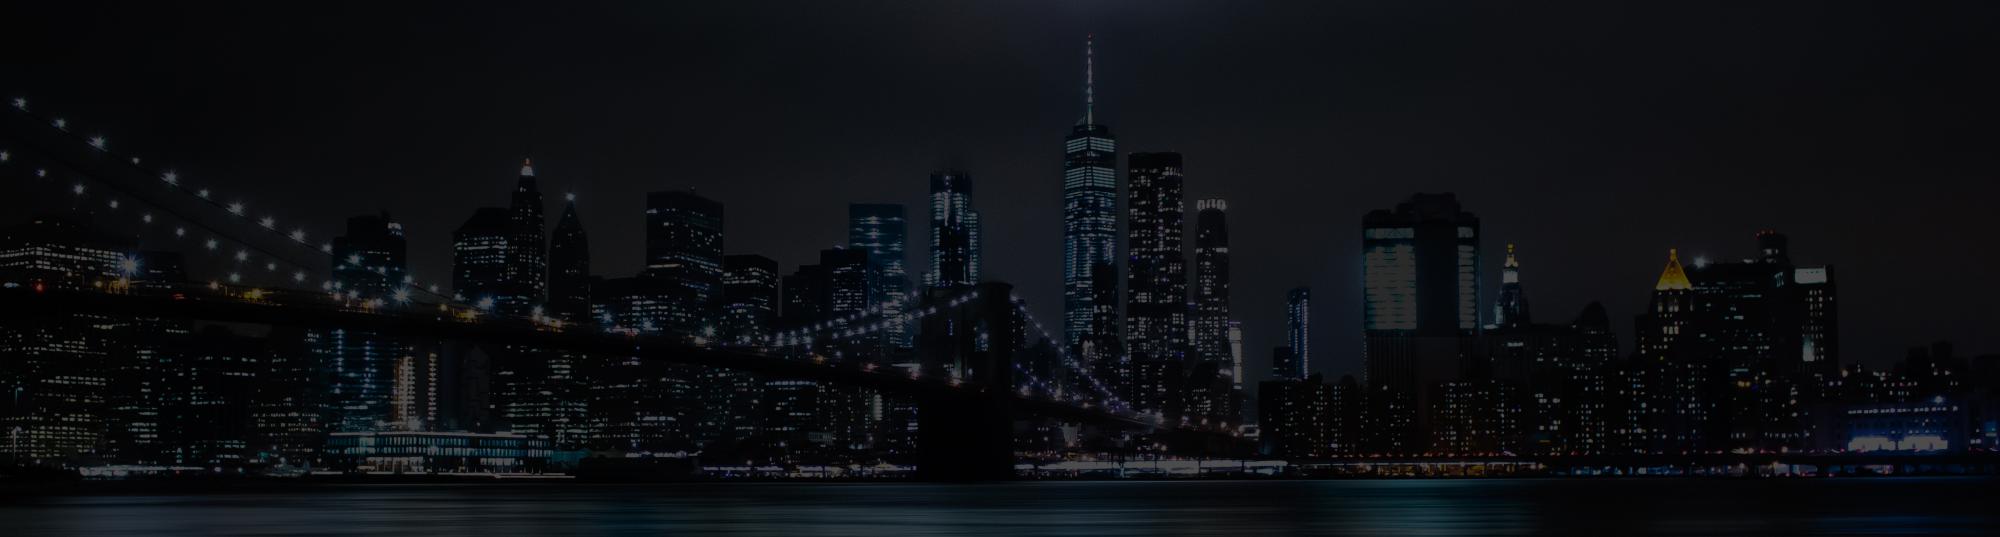 Night city skyscape